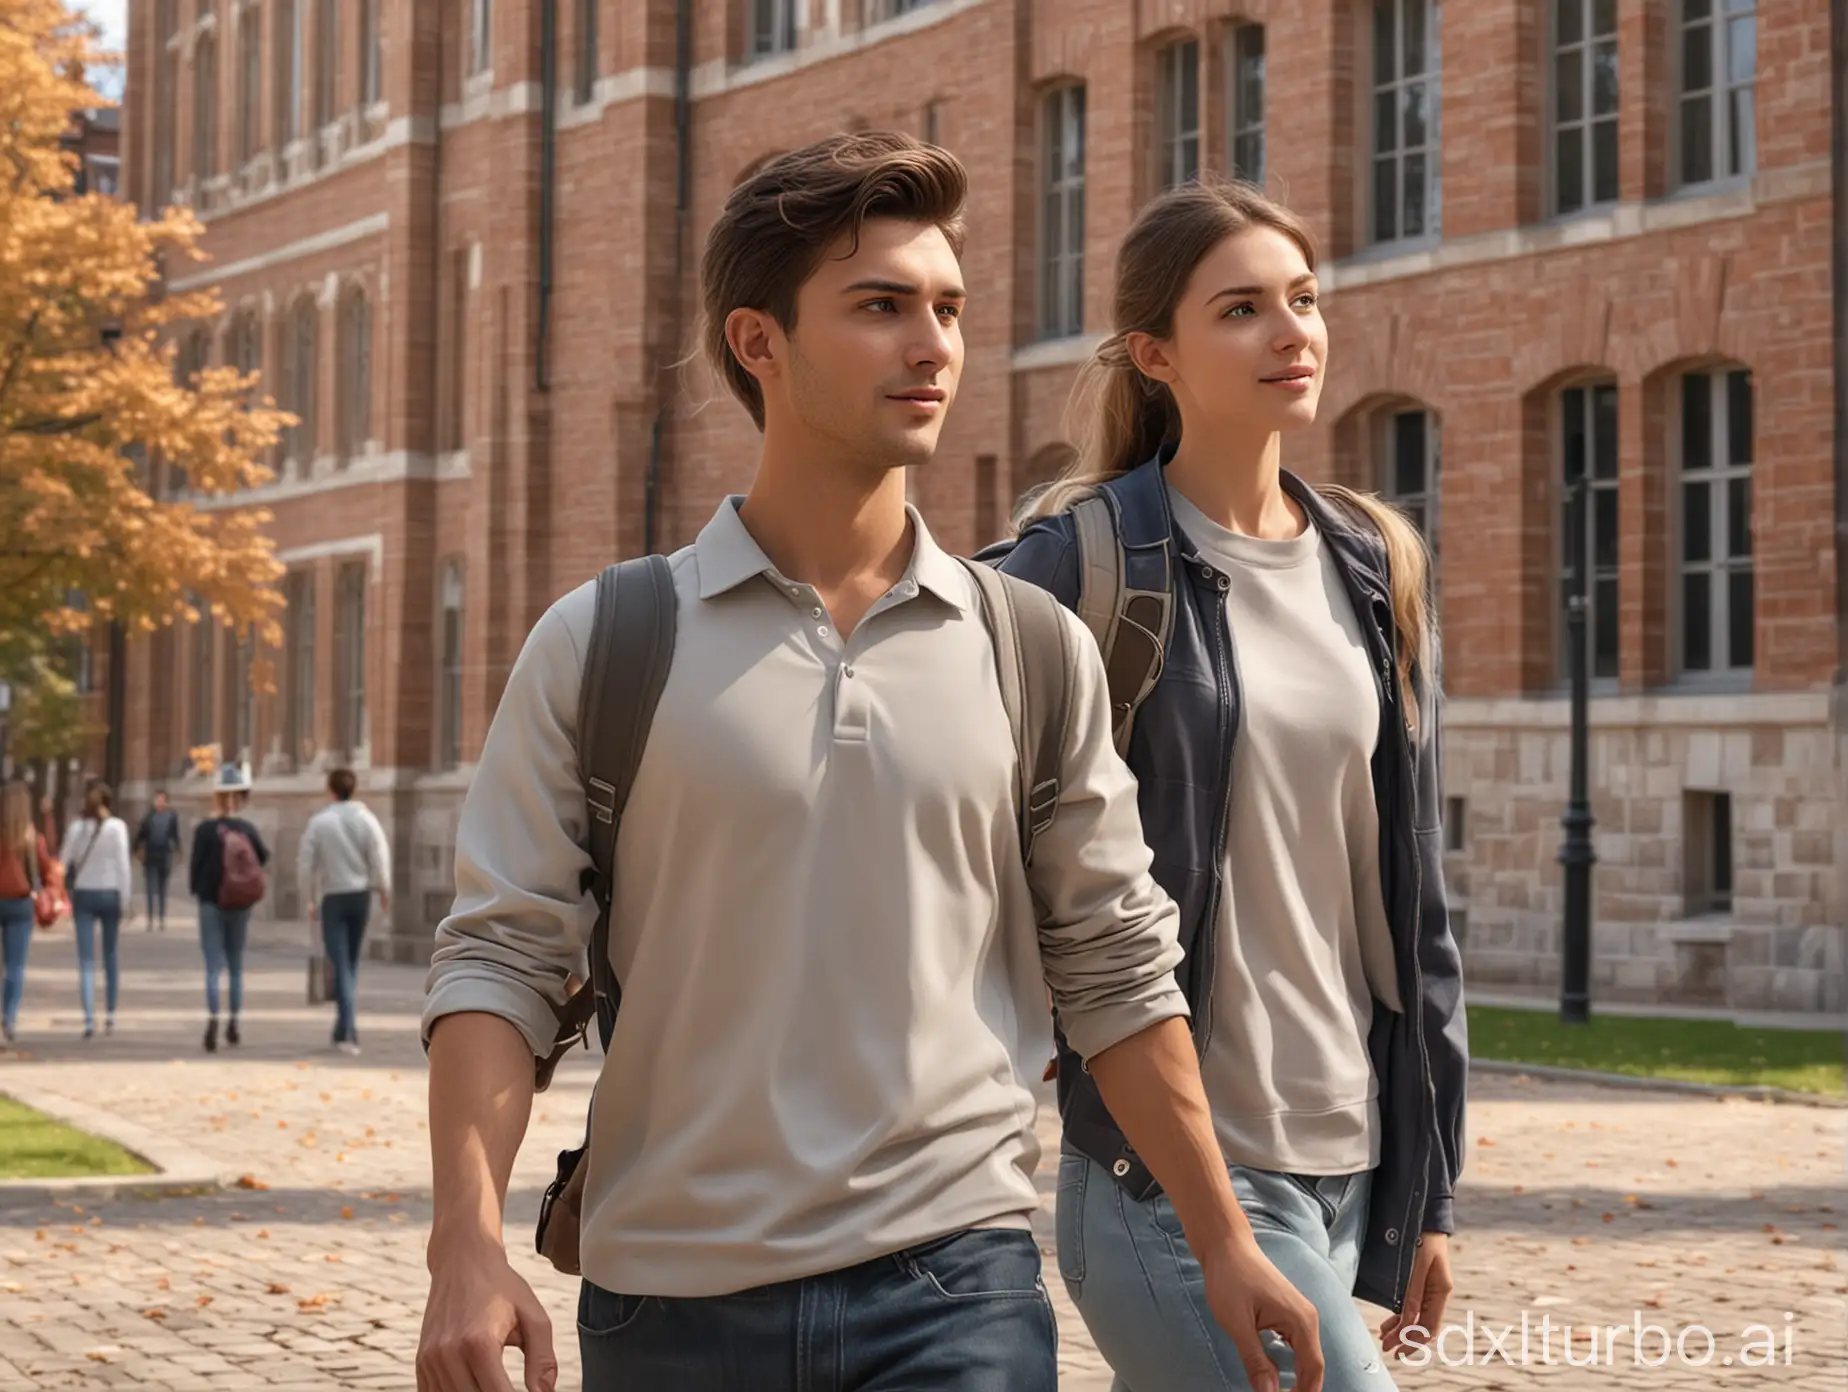 University-Campus-Couple-Walking-Together